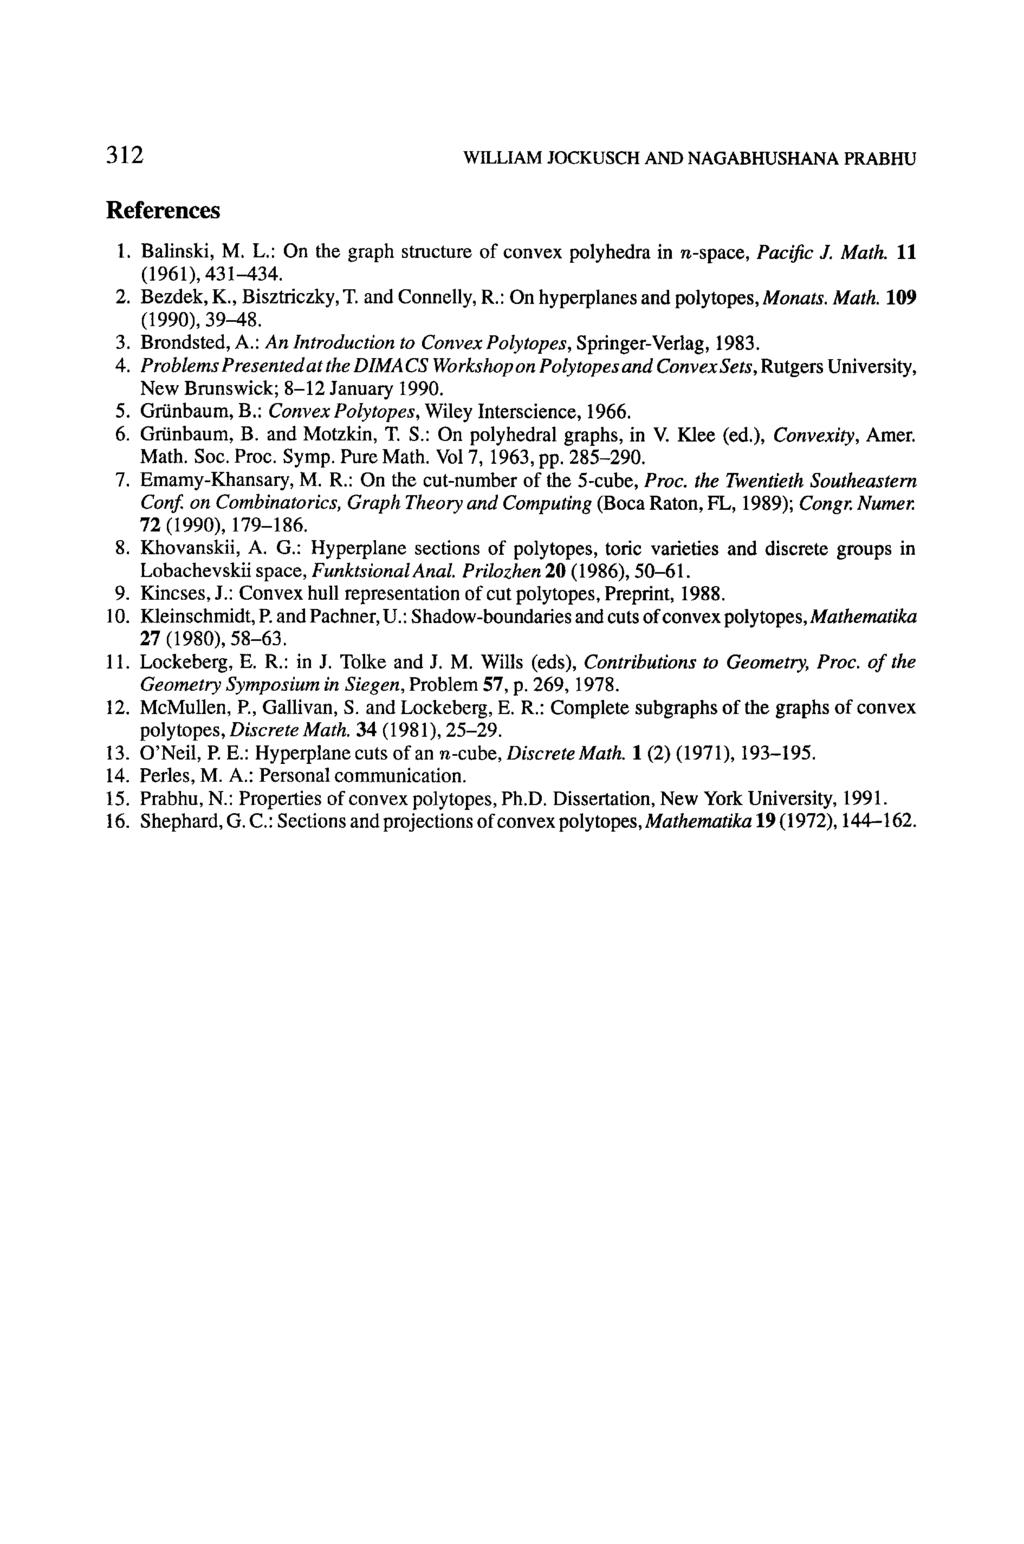 312 WILLIAM JOCKUSCH AND NAGABHUSHANA PRABHU References 1. Balinski, M. L.: On the graph structure of convex polyhedra in n-space, Pacific J. Math. 11 (1961), 431-434. 2. Bezdek, K., Bisztriczky, T.